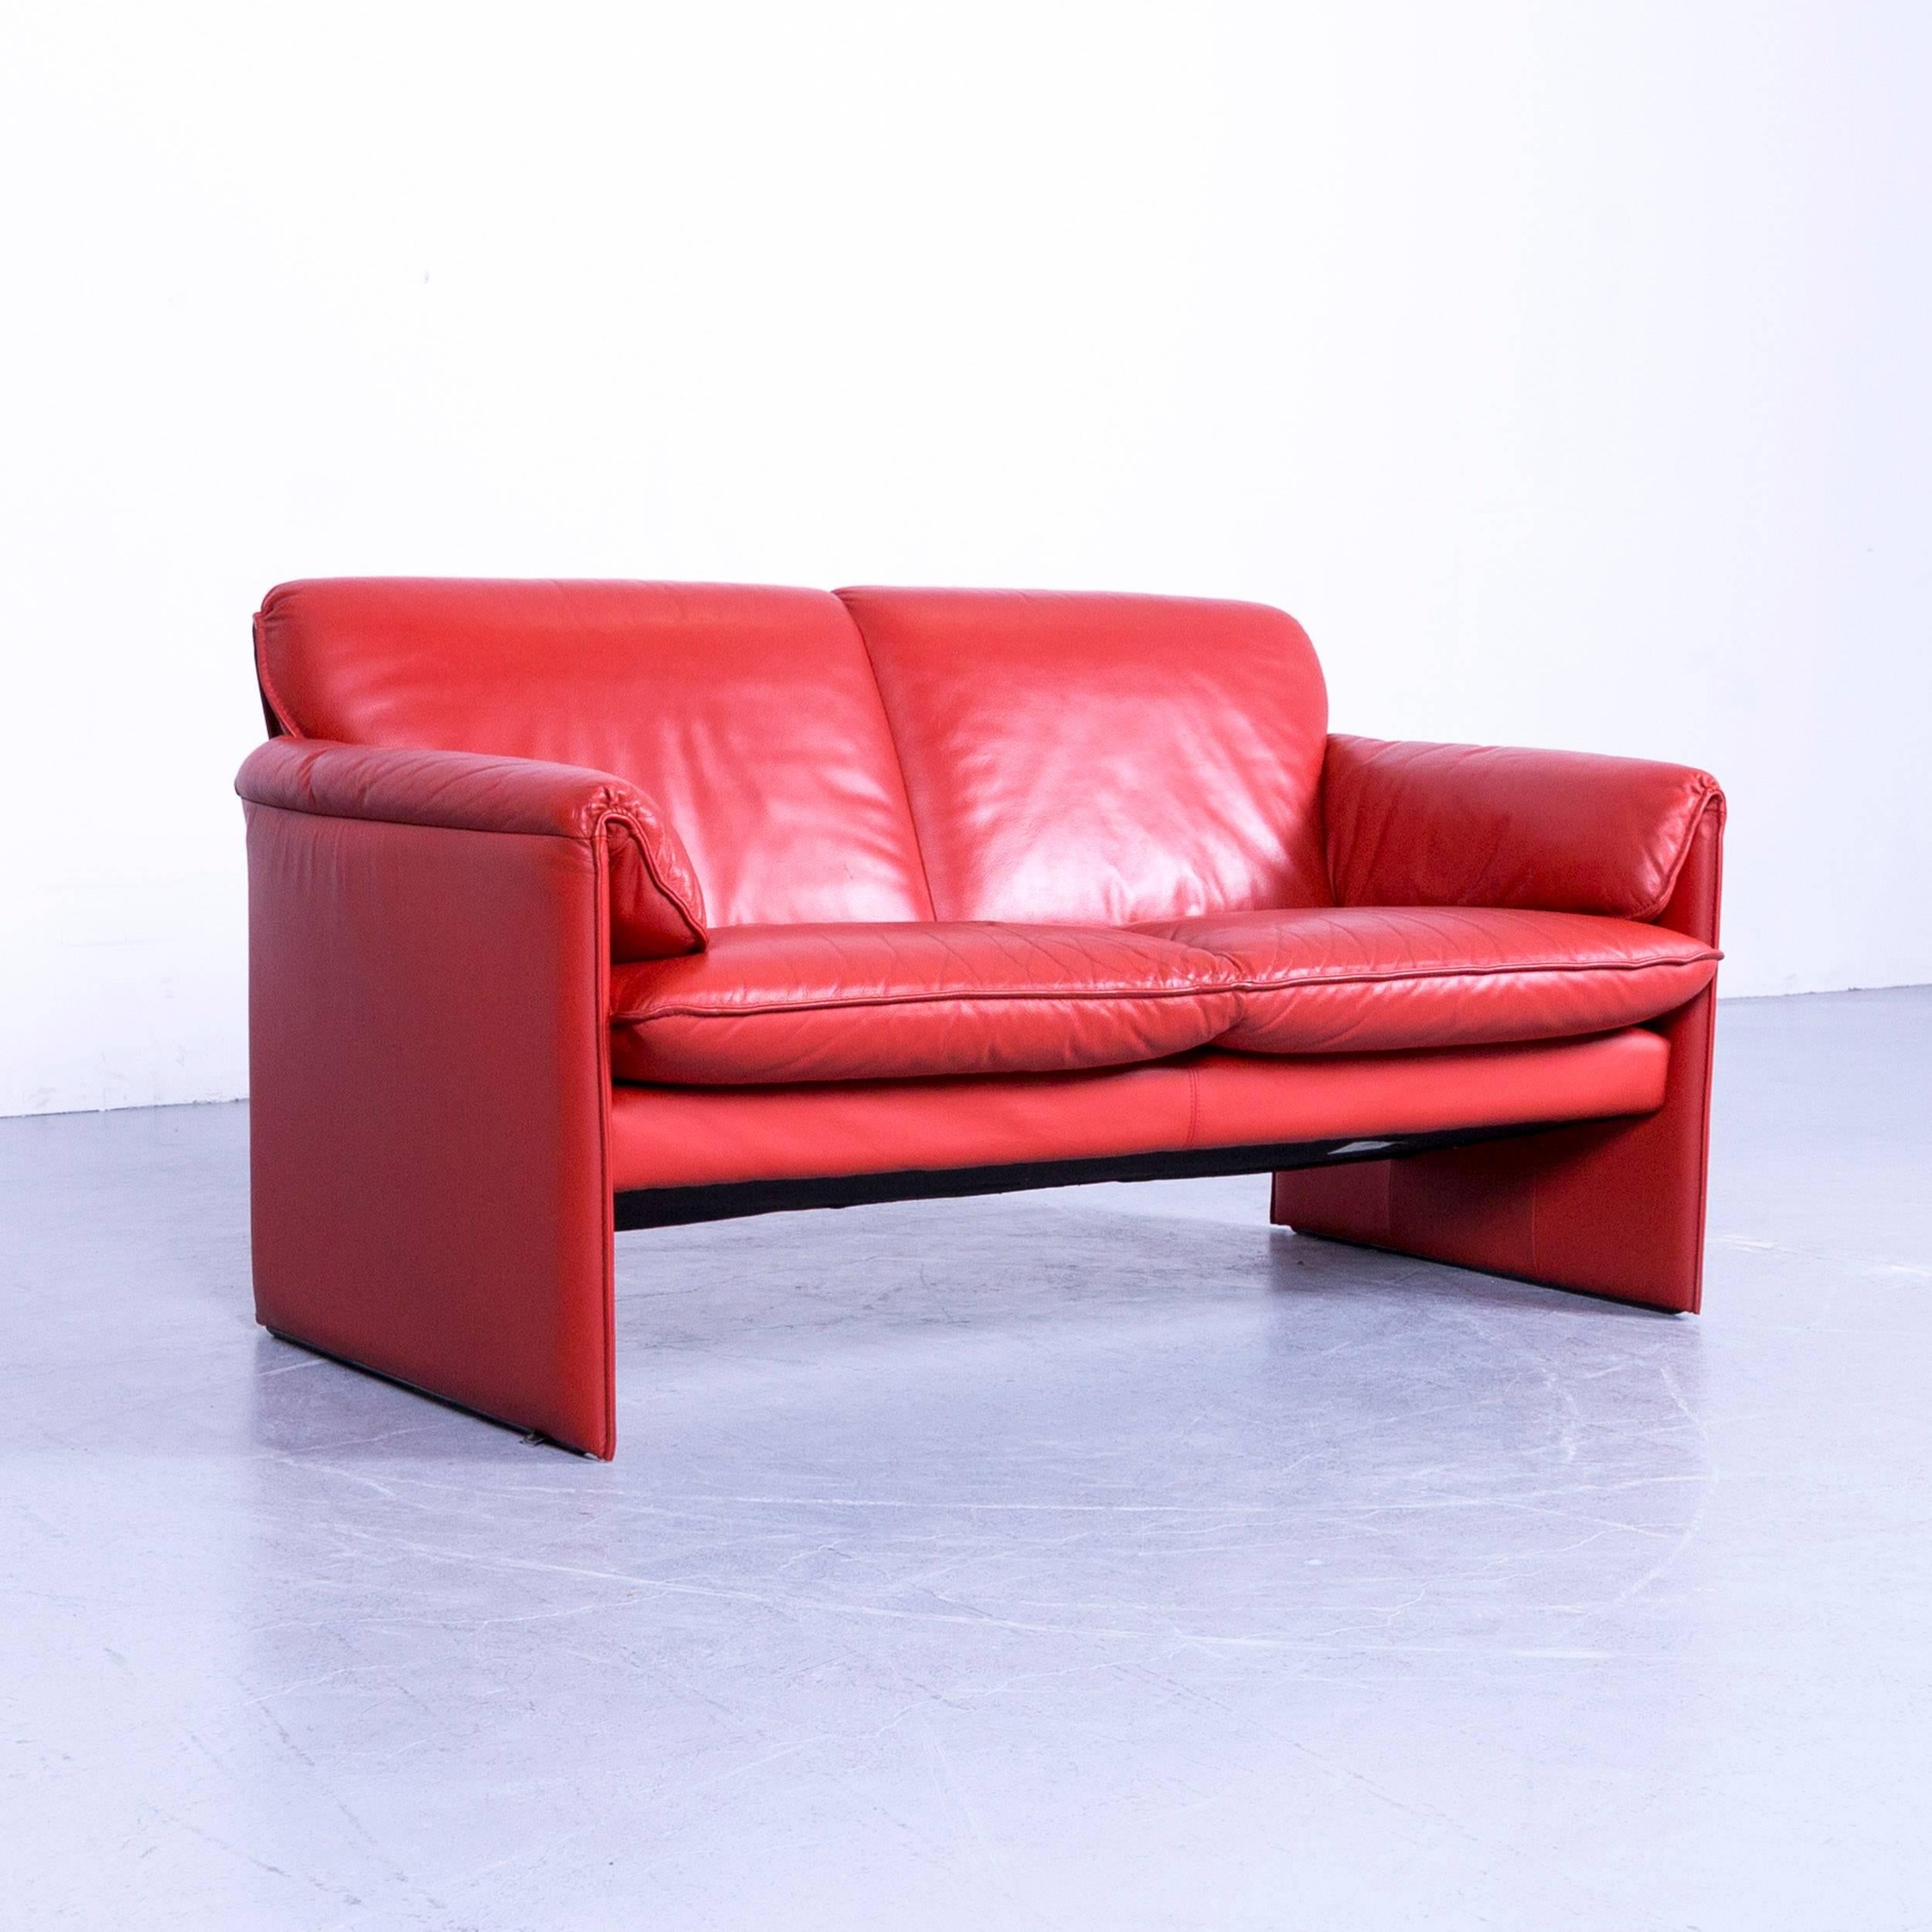 Orange red colored original Leolux Bora designer leather sofa in a minimalistic and modern design, made for pure comfort.